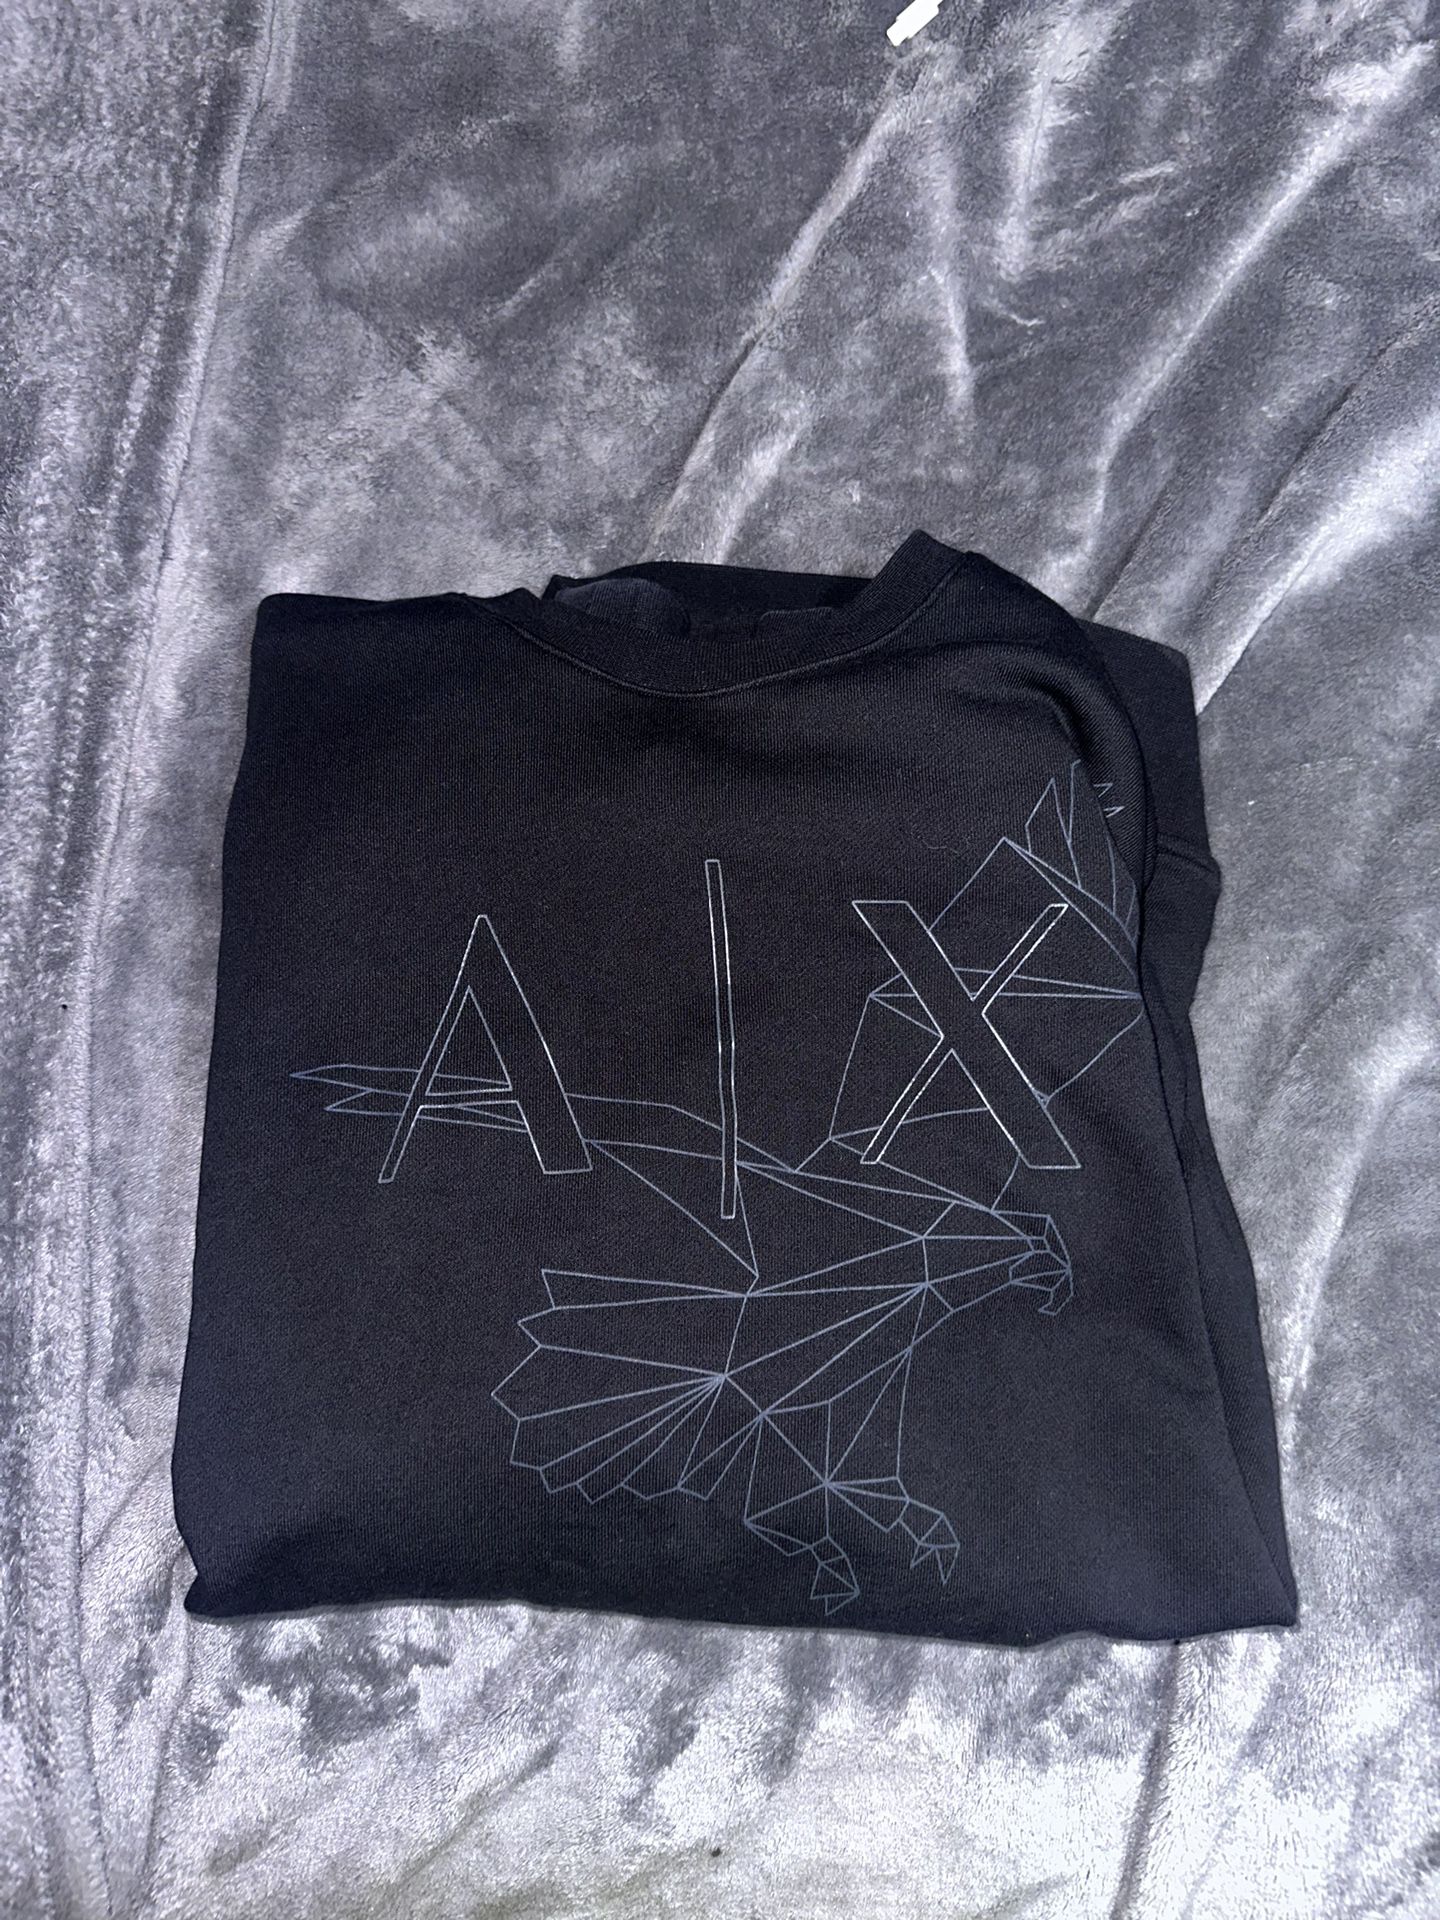 Armani Exchange long Sleeve Sweatshirt for Sale in Phoenix, AZ - OfferUp